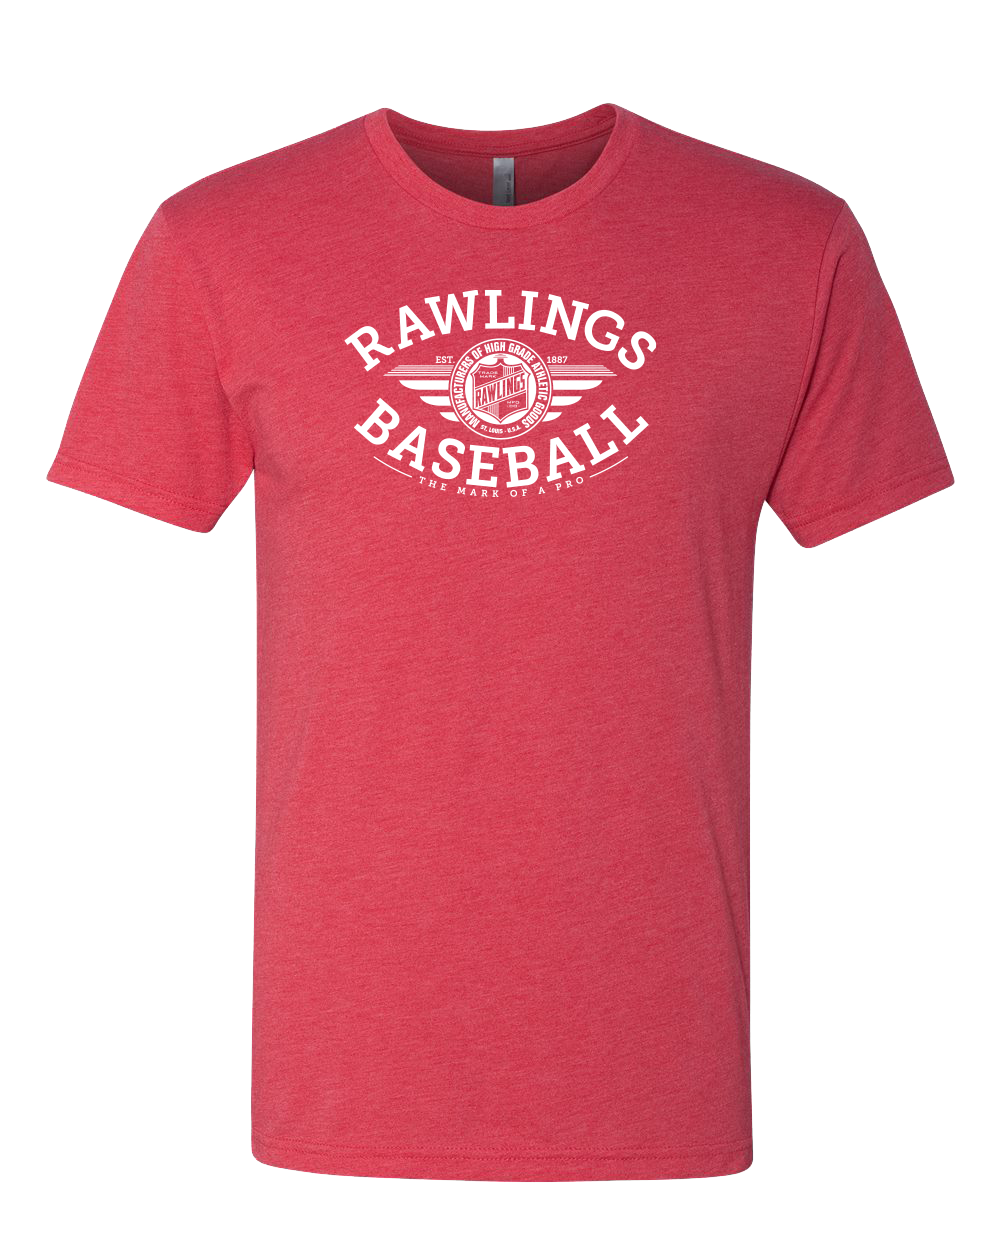 rawlings baseball shirts